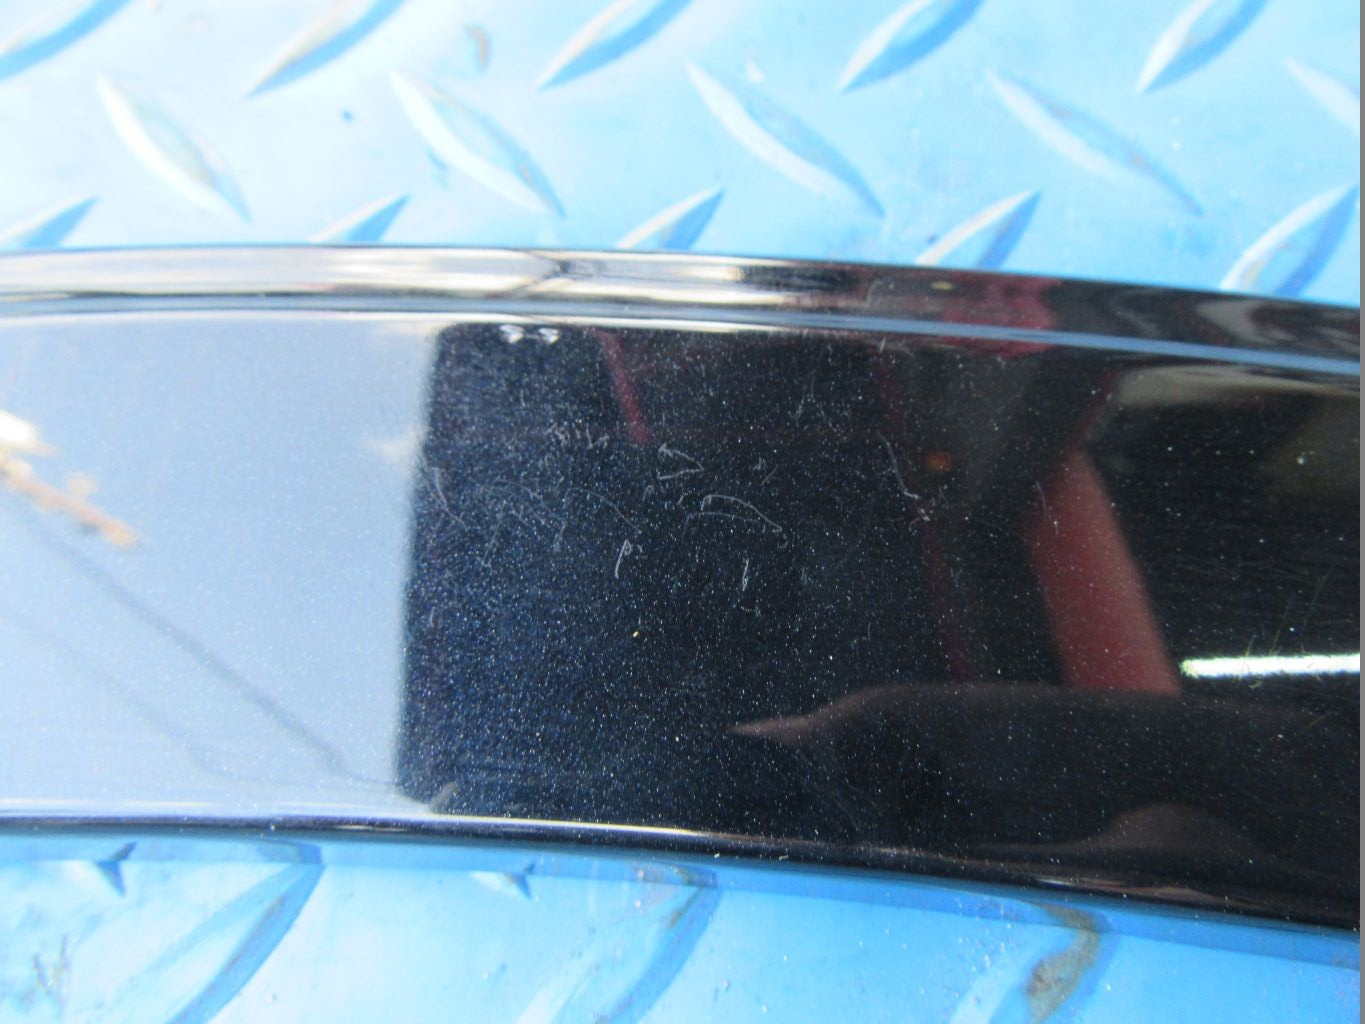 Bentley Bentayga rear left forward wheel arch trim molding #7871